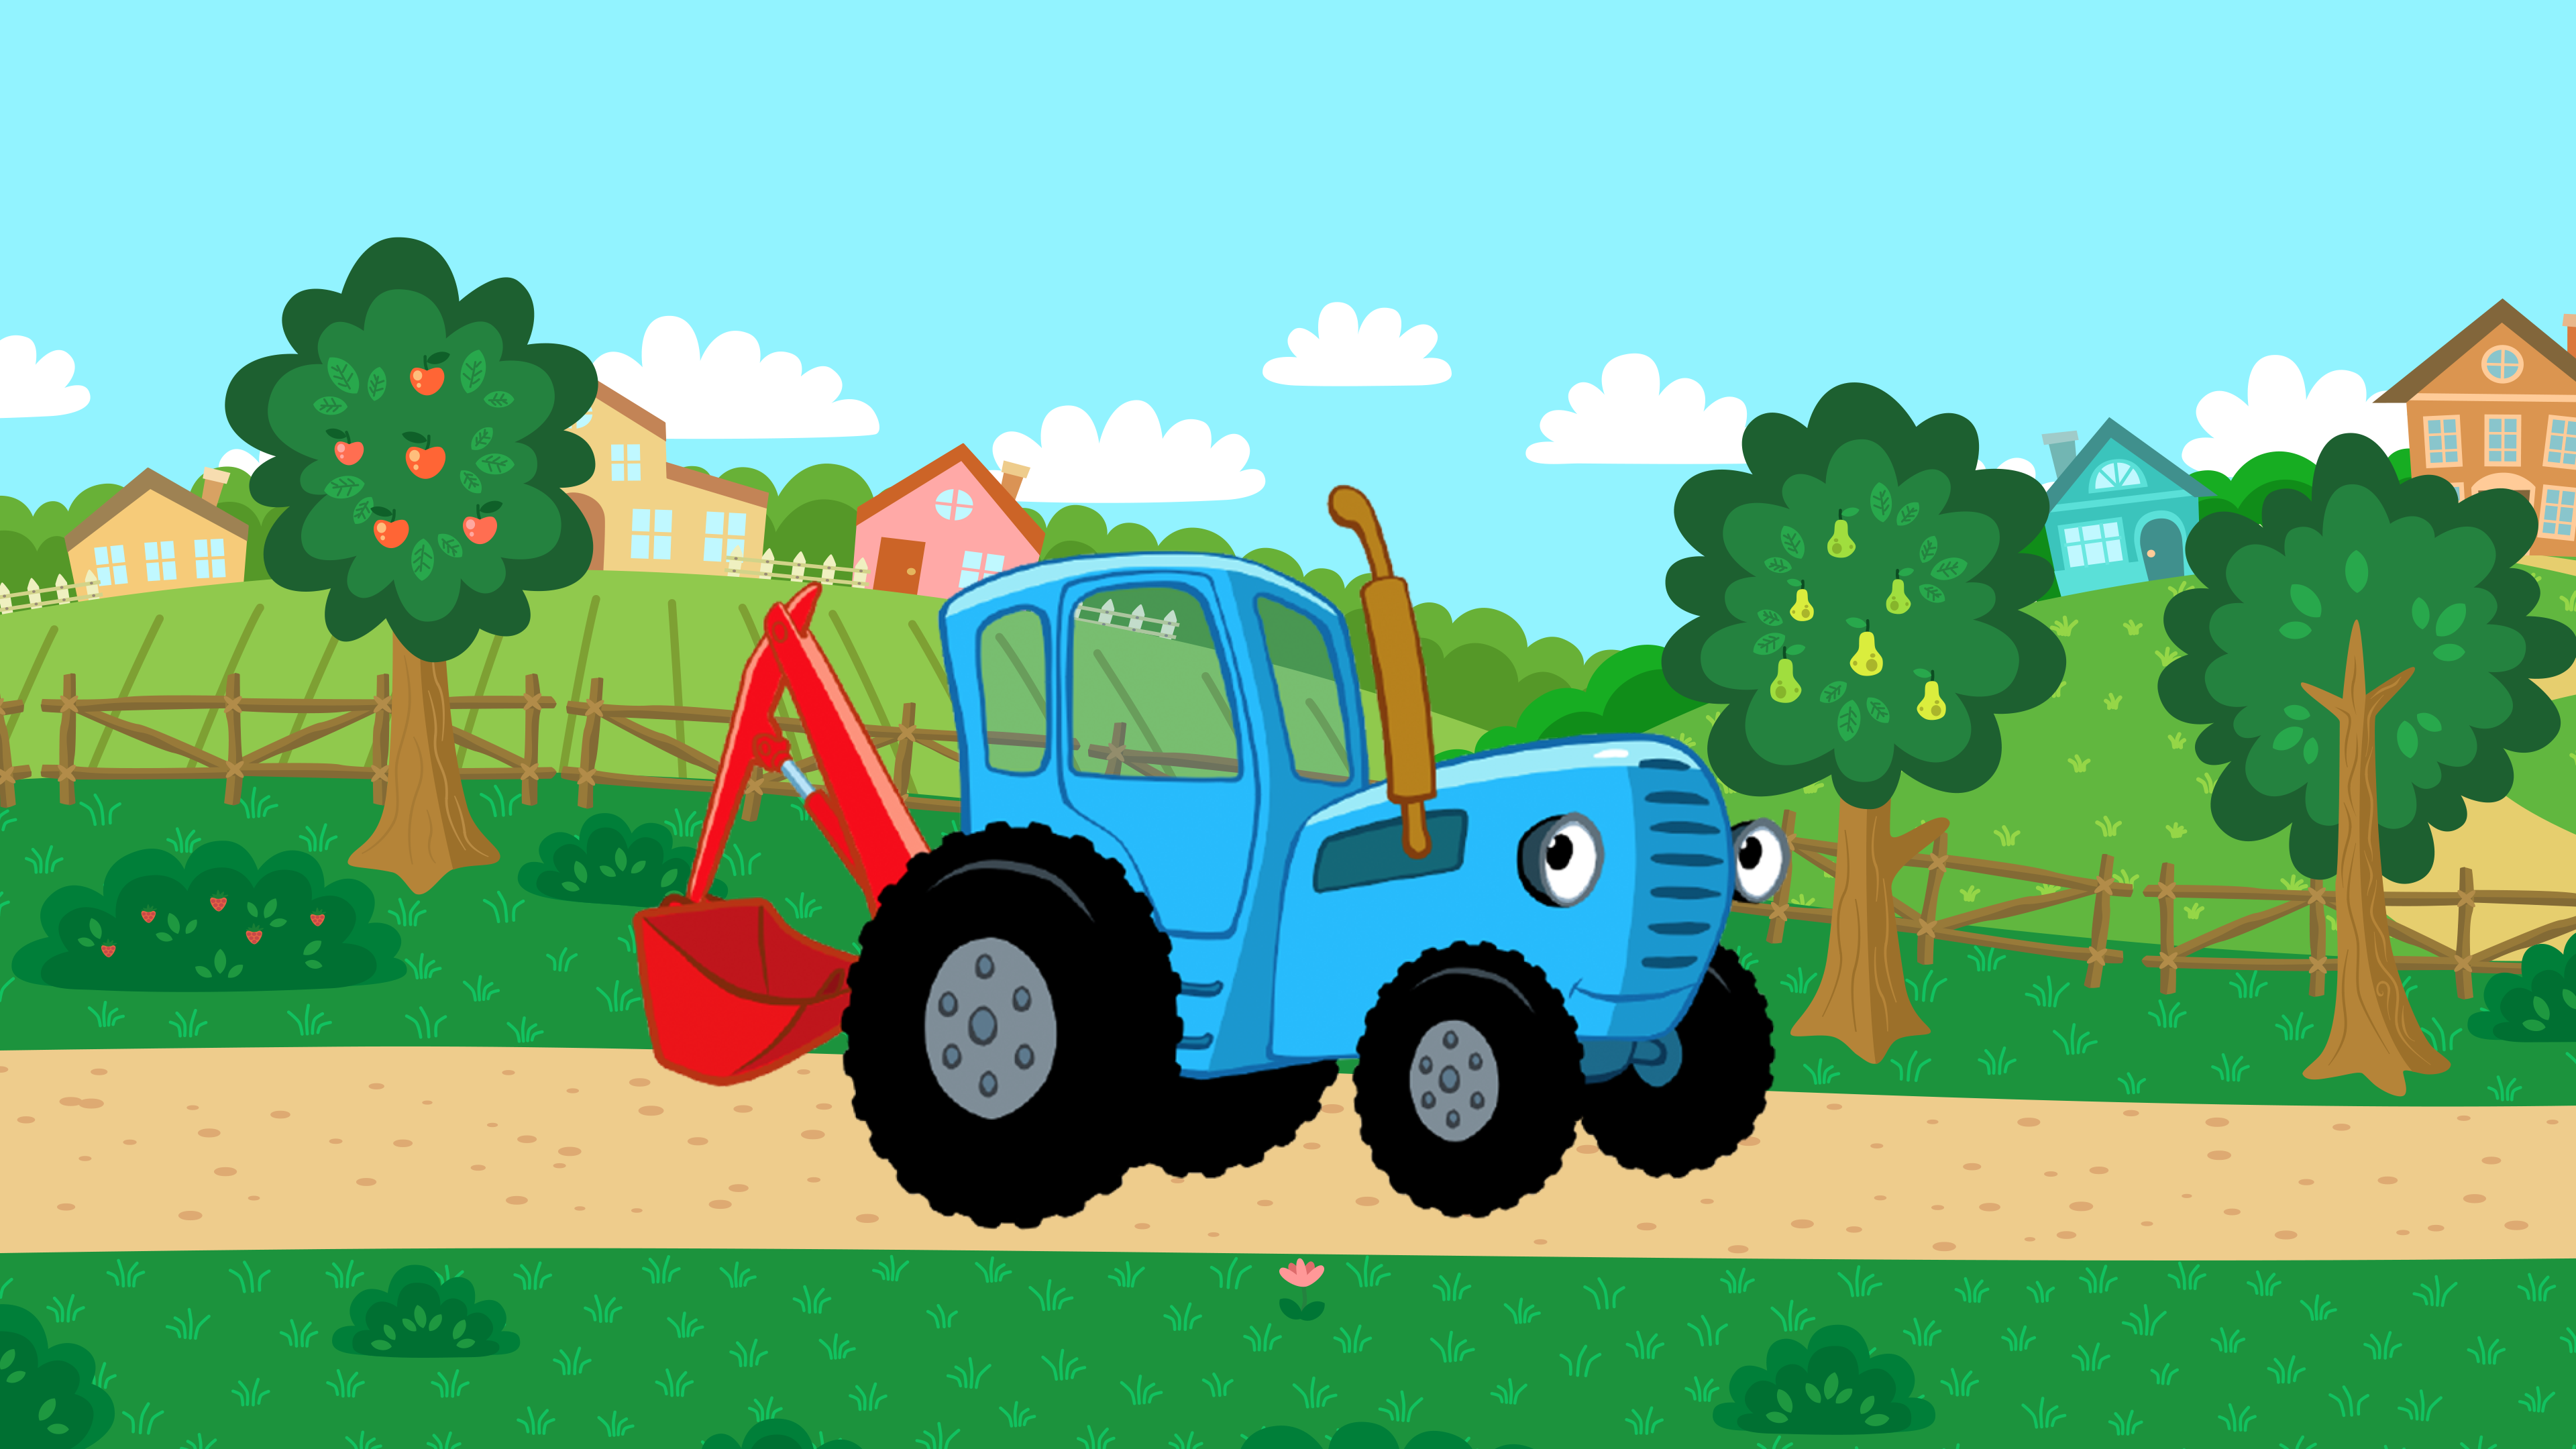 Габор синий трактор. Синий трактор дел